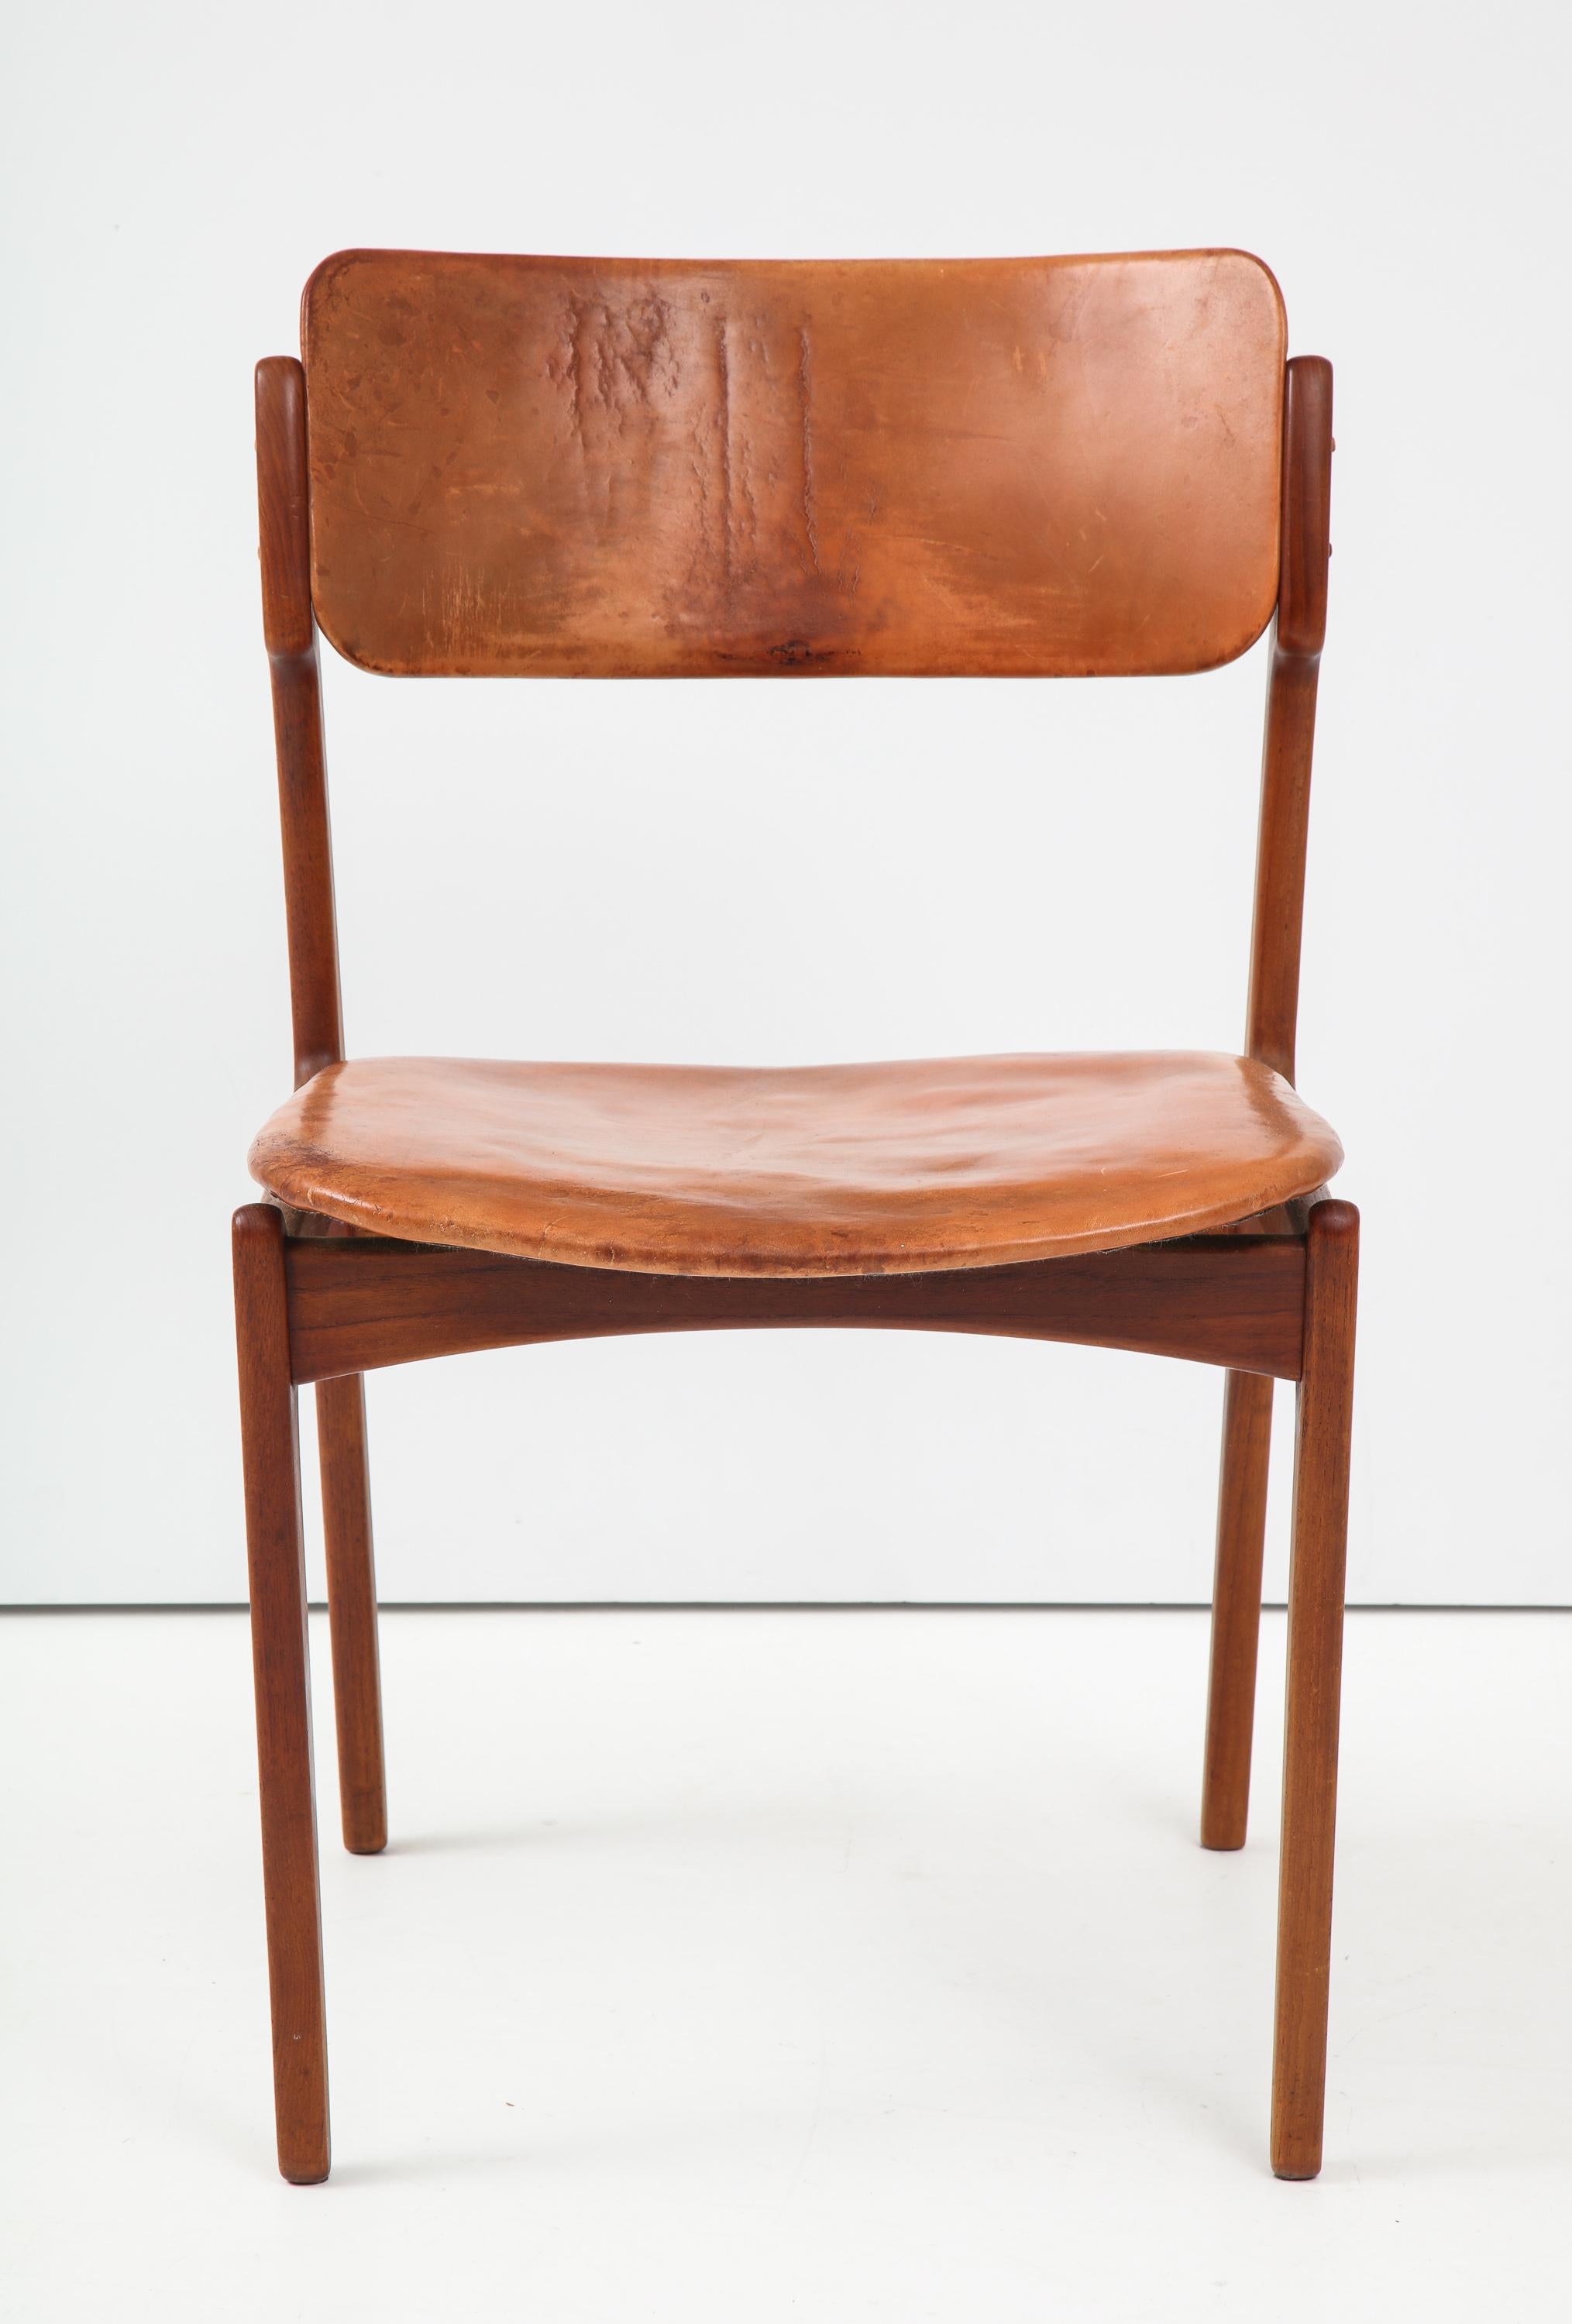 Scandinavian Modern Early Production Erik Buck Teak and Leather Chair